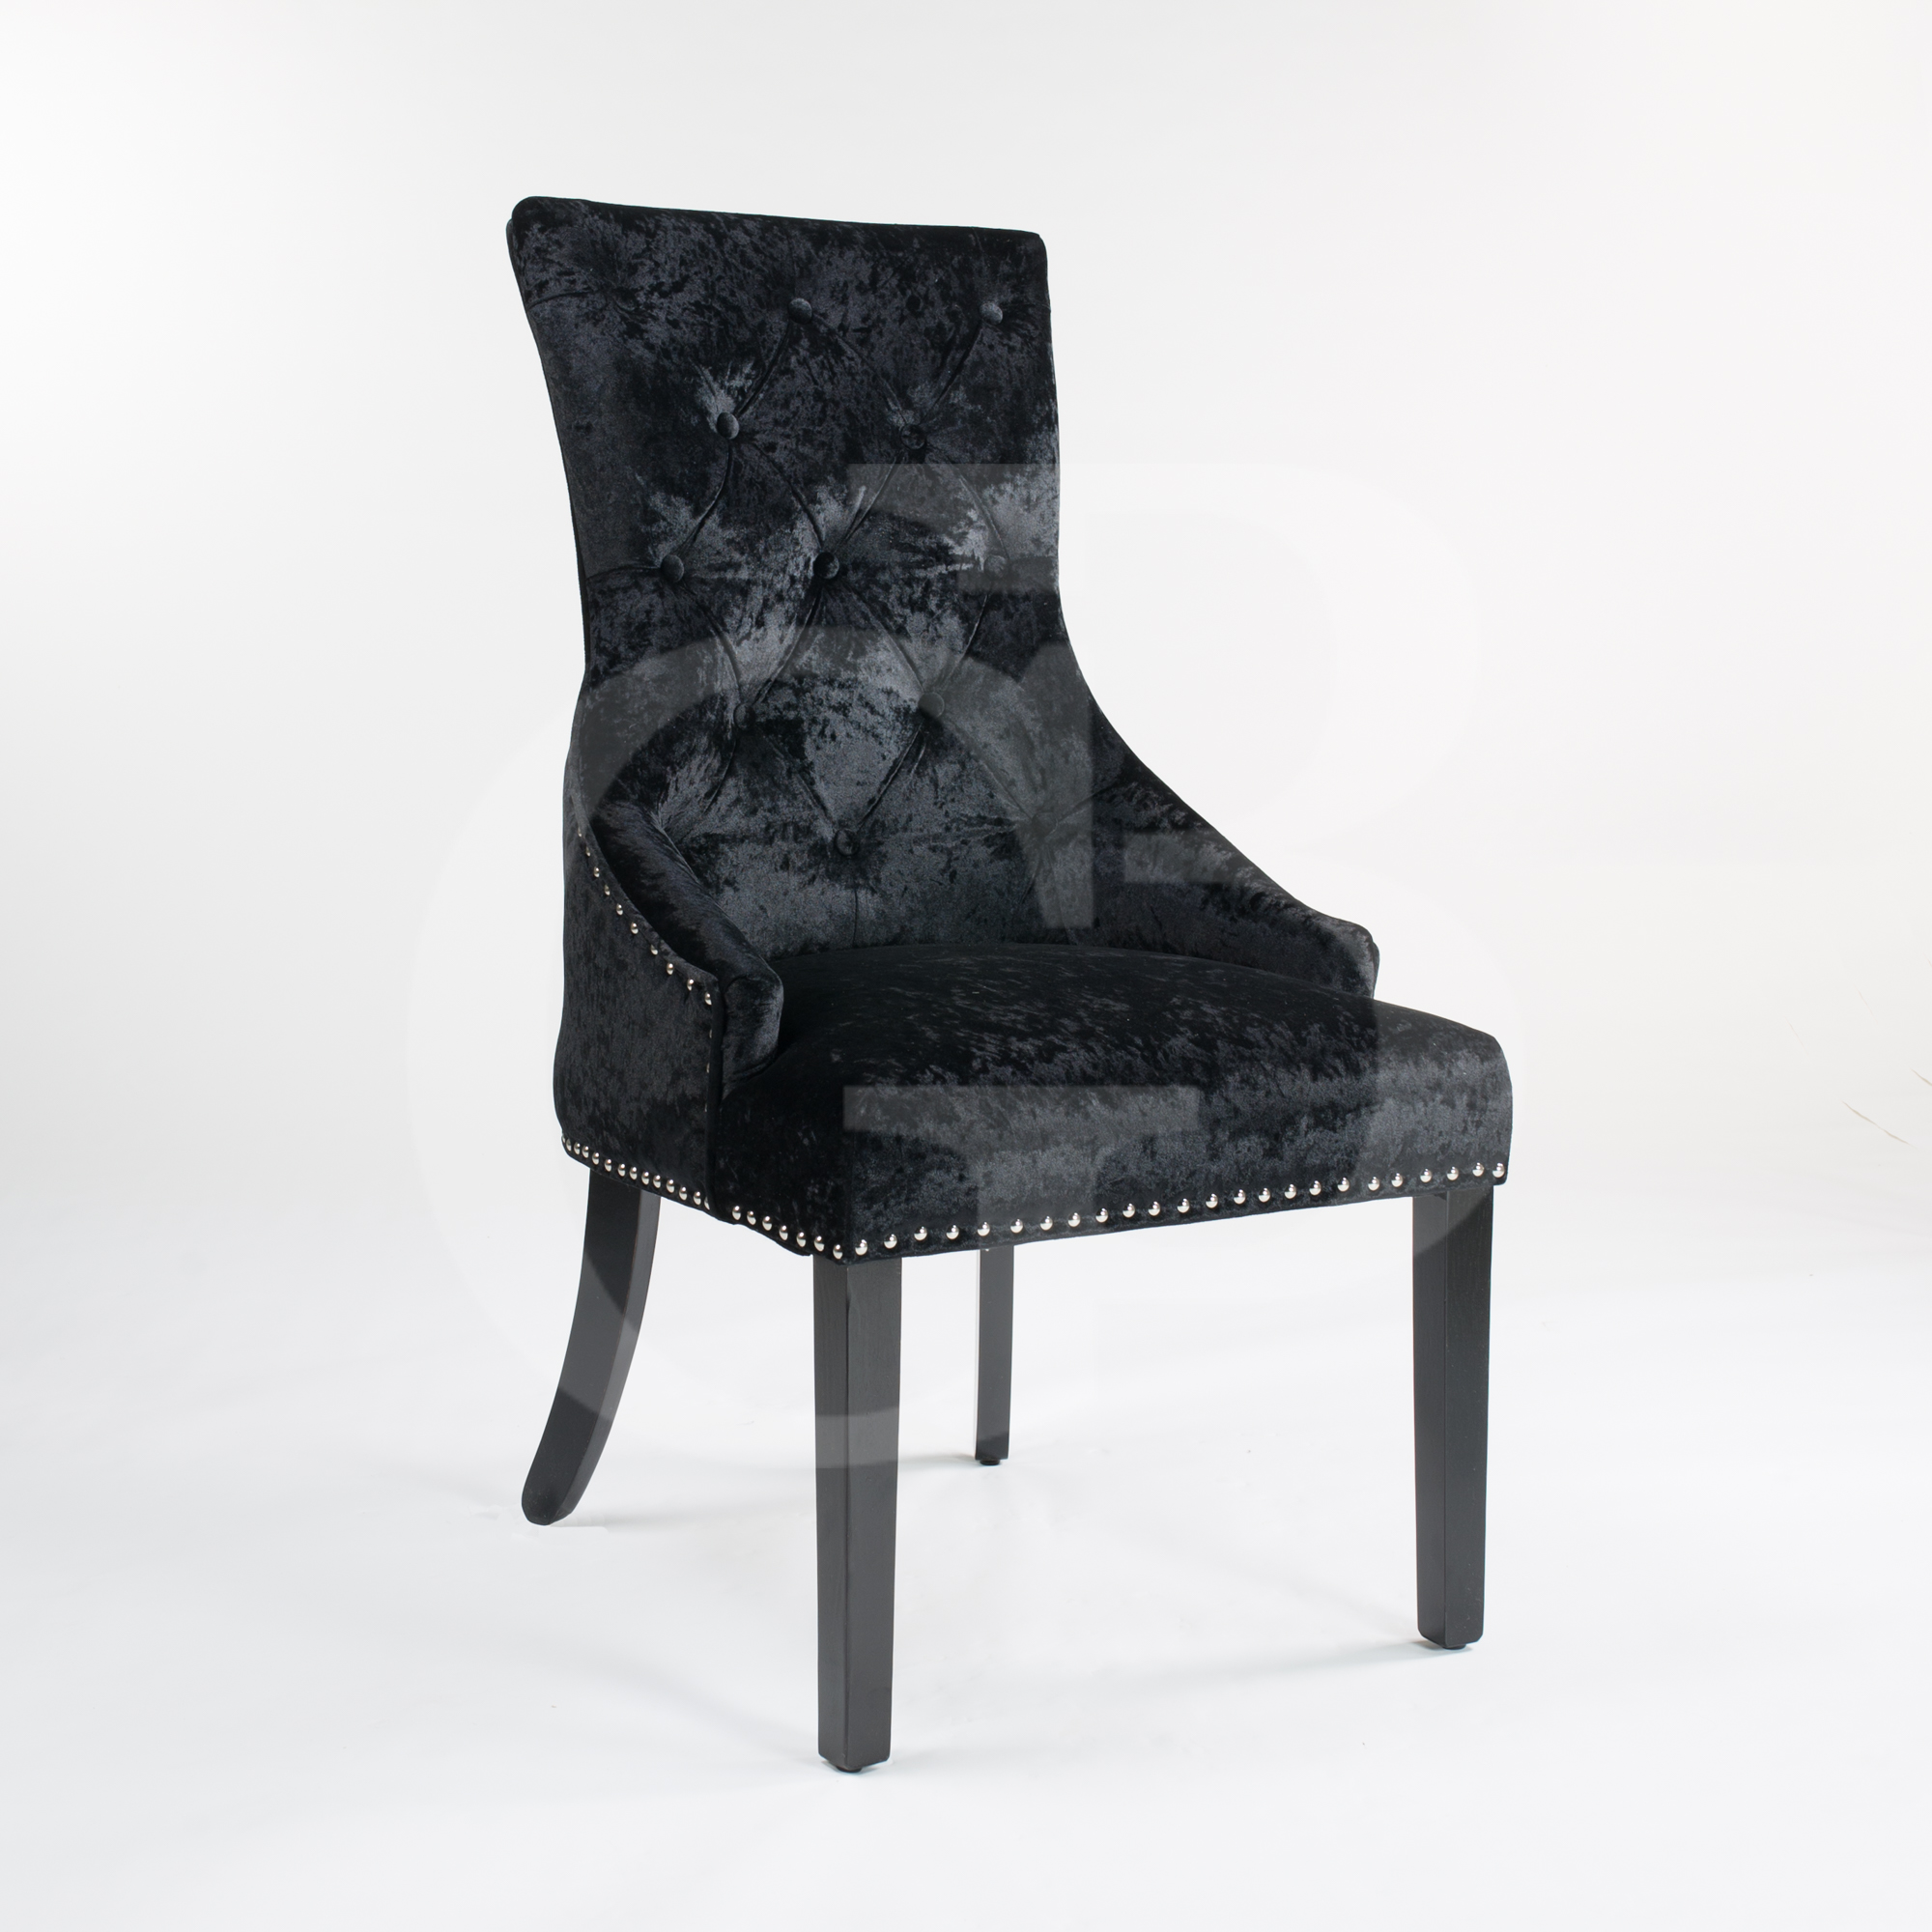 Black Upholstered Crushed Velvet Dining Chair With Chrome Studs & Ring